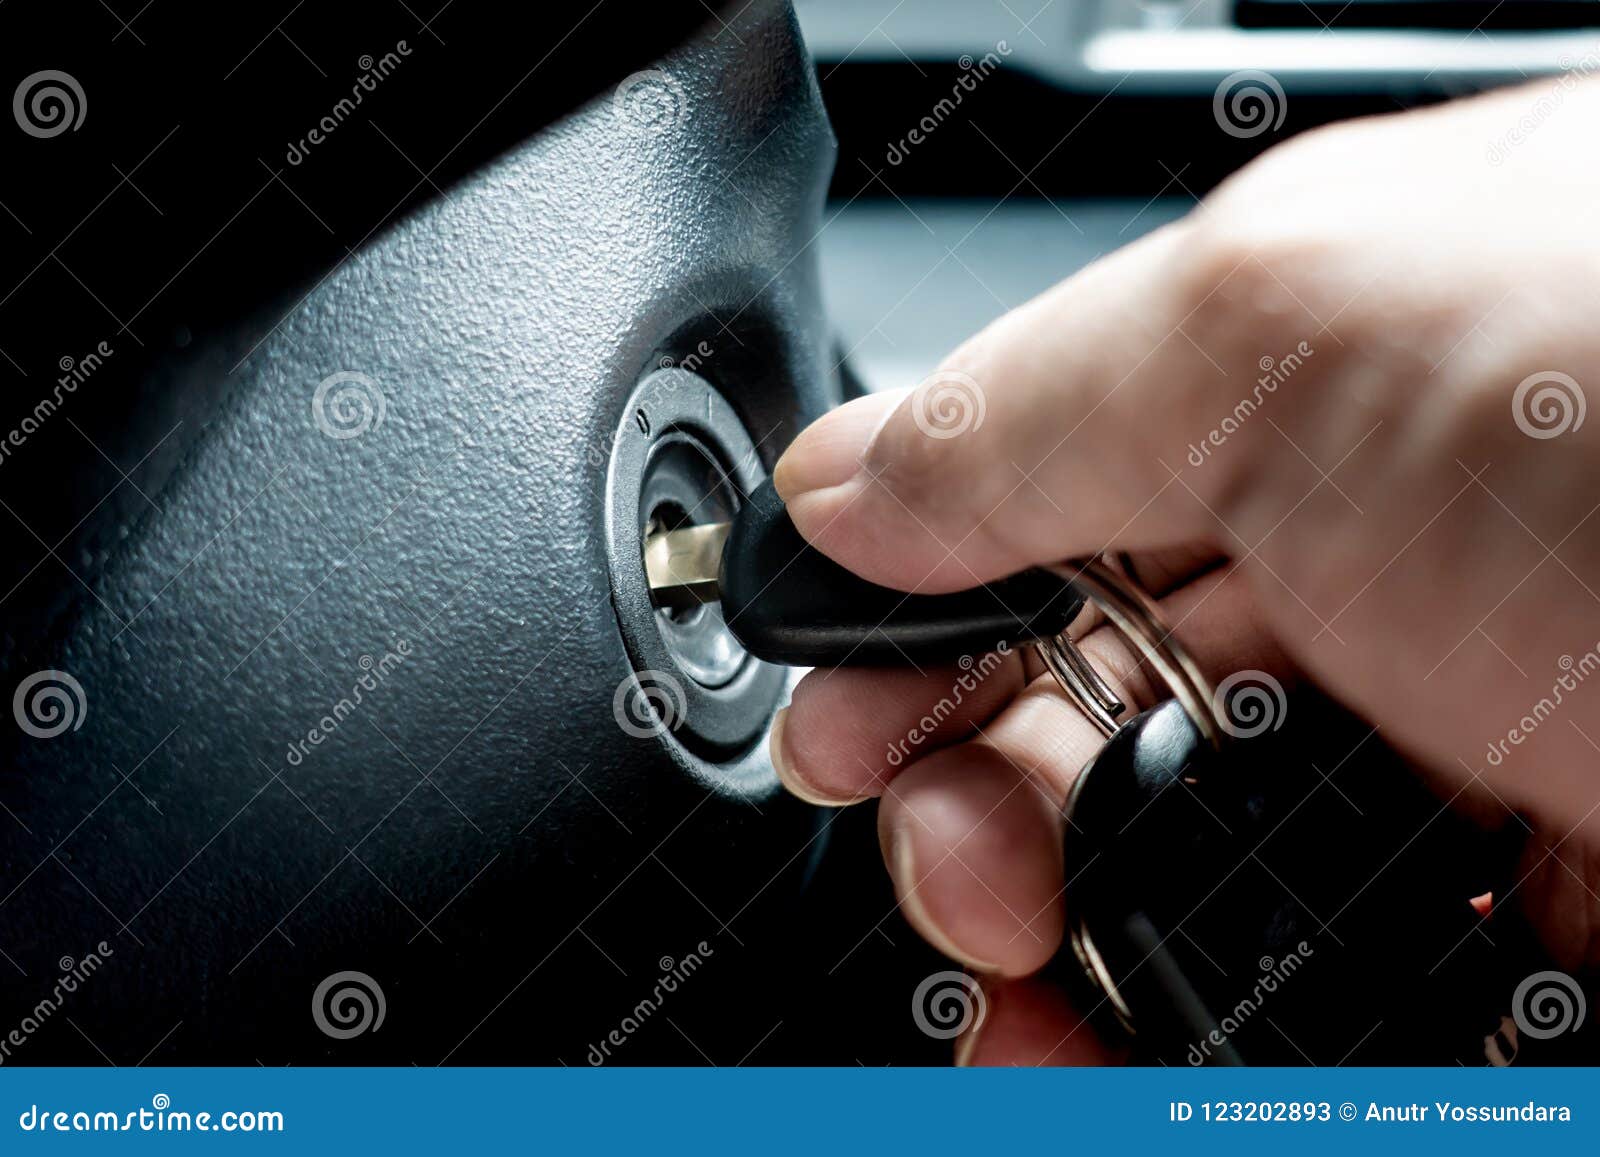 turning car key in the key hole to start the car engine